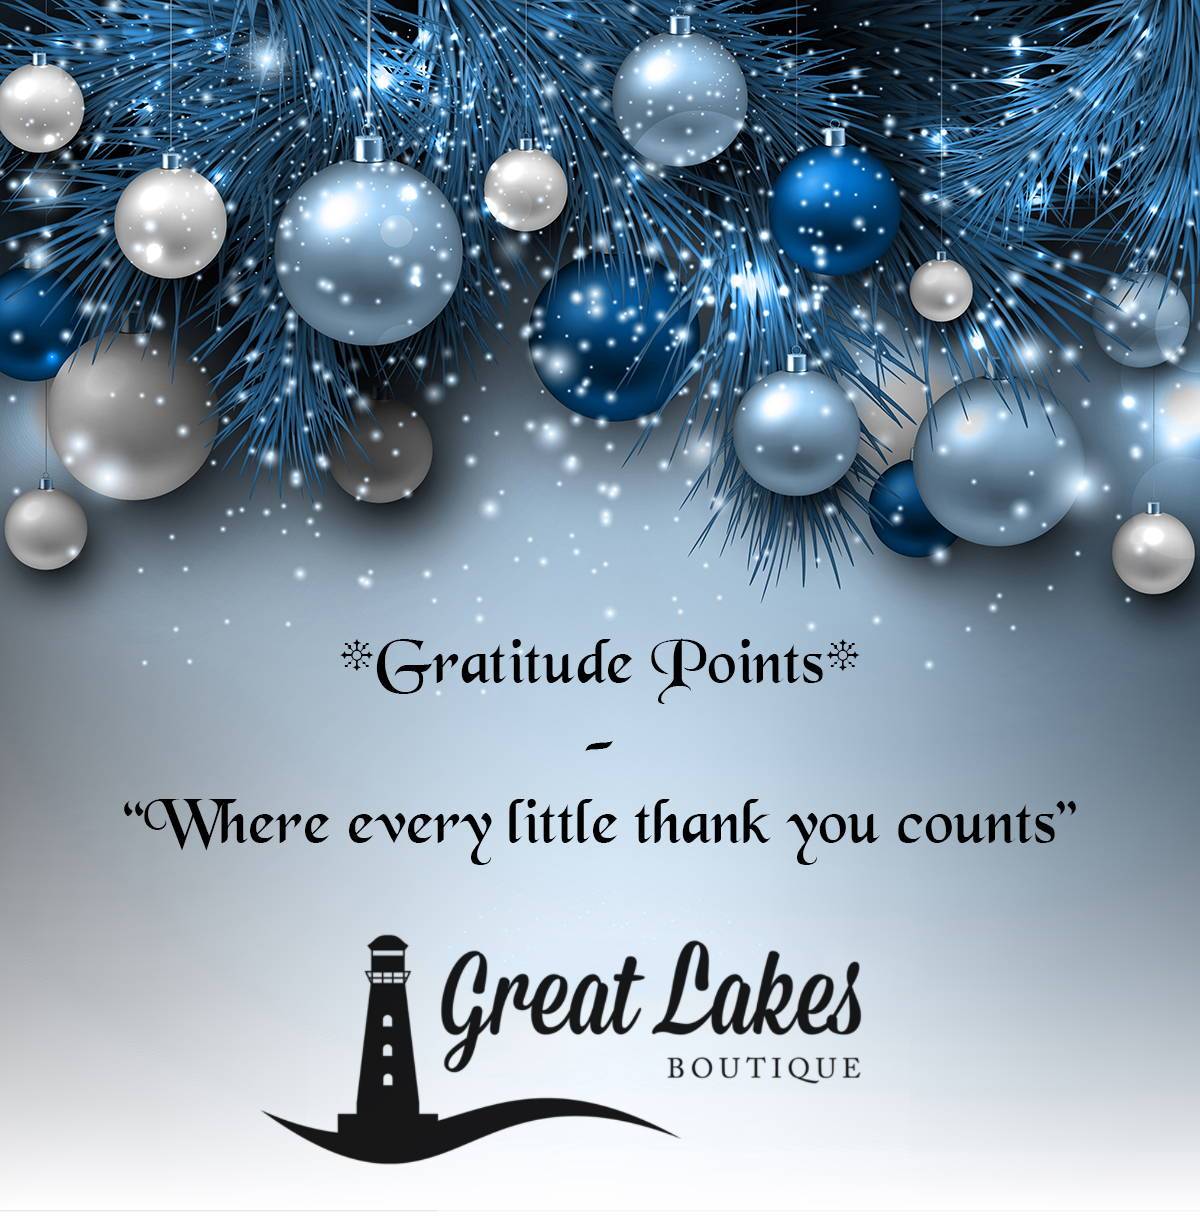 Introducing Gratitude Points